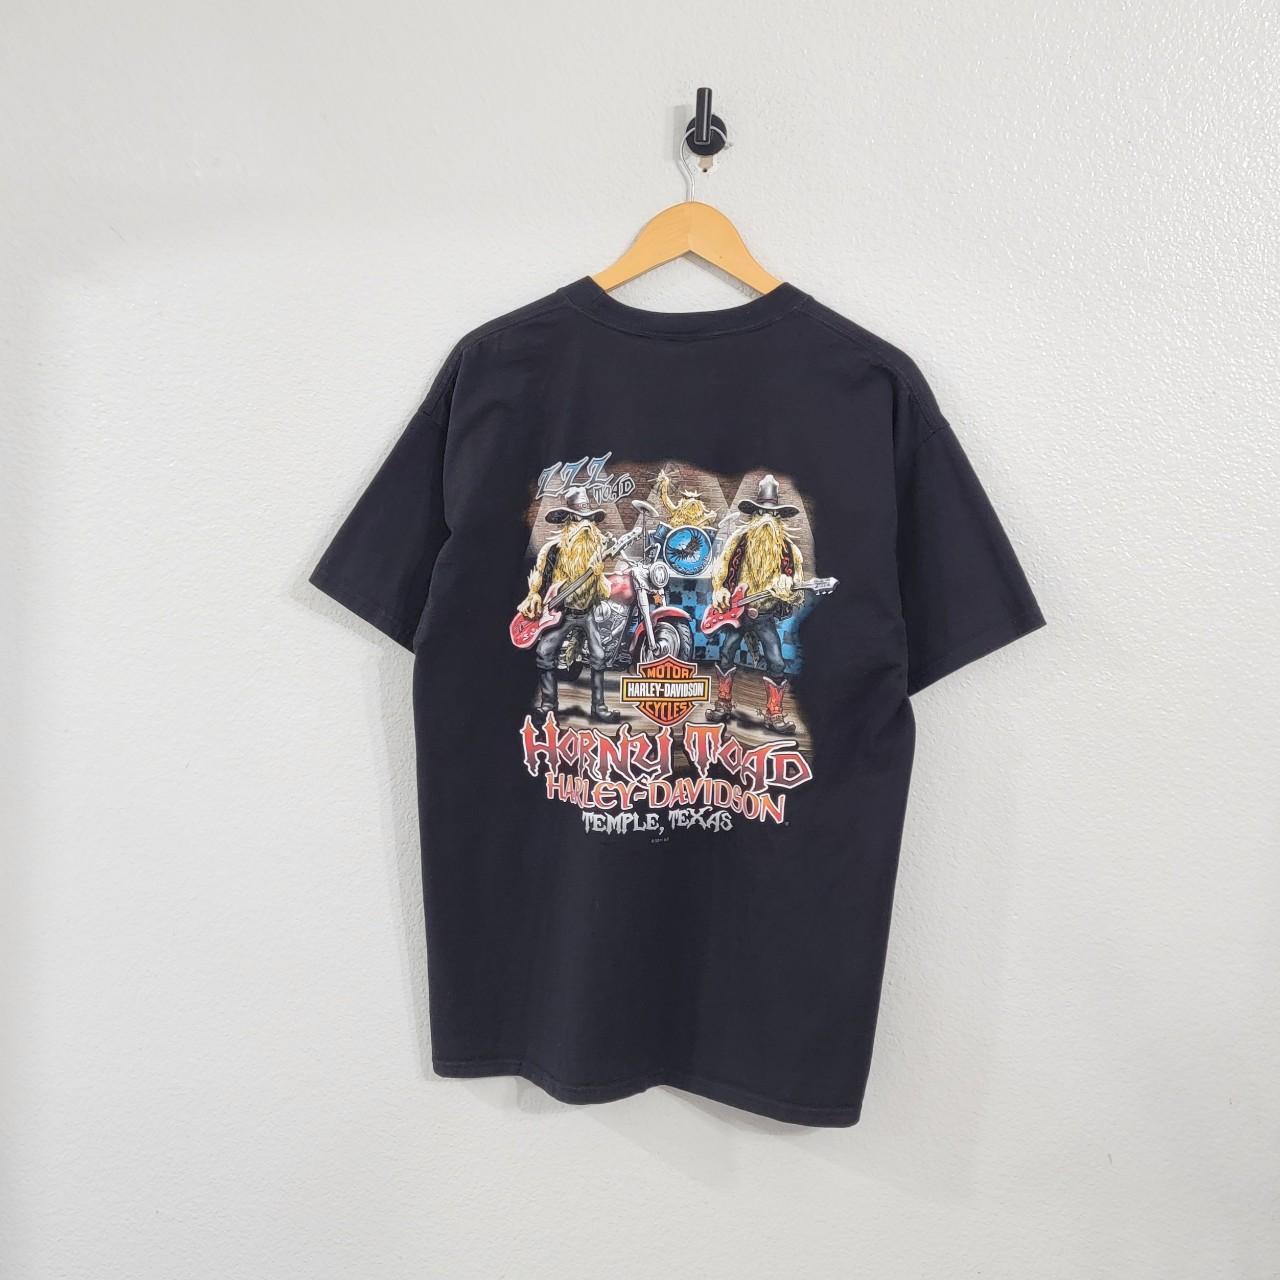 Harley Davidson Men's multi T-shirt (3)